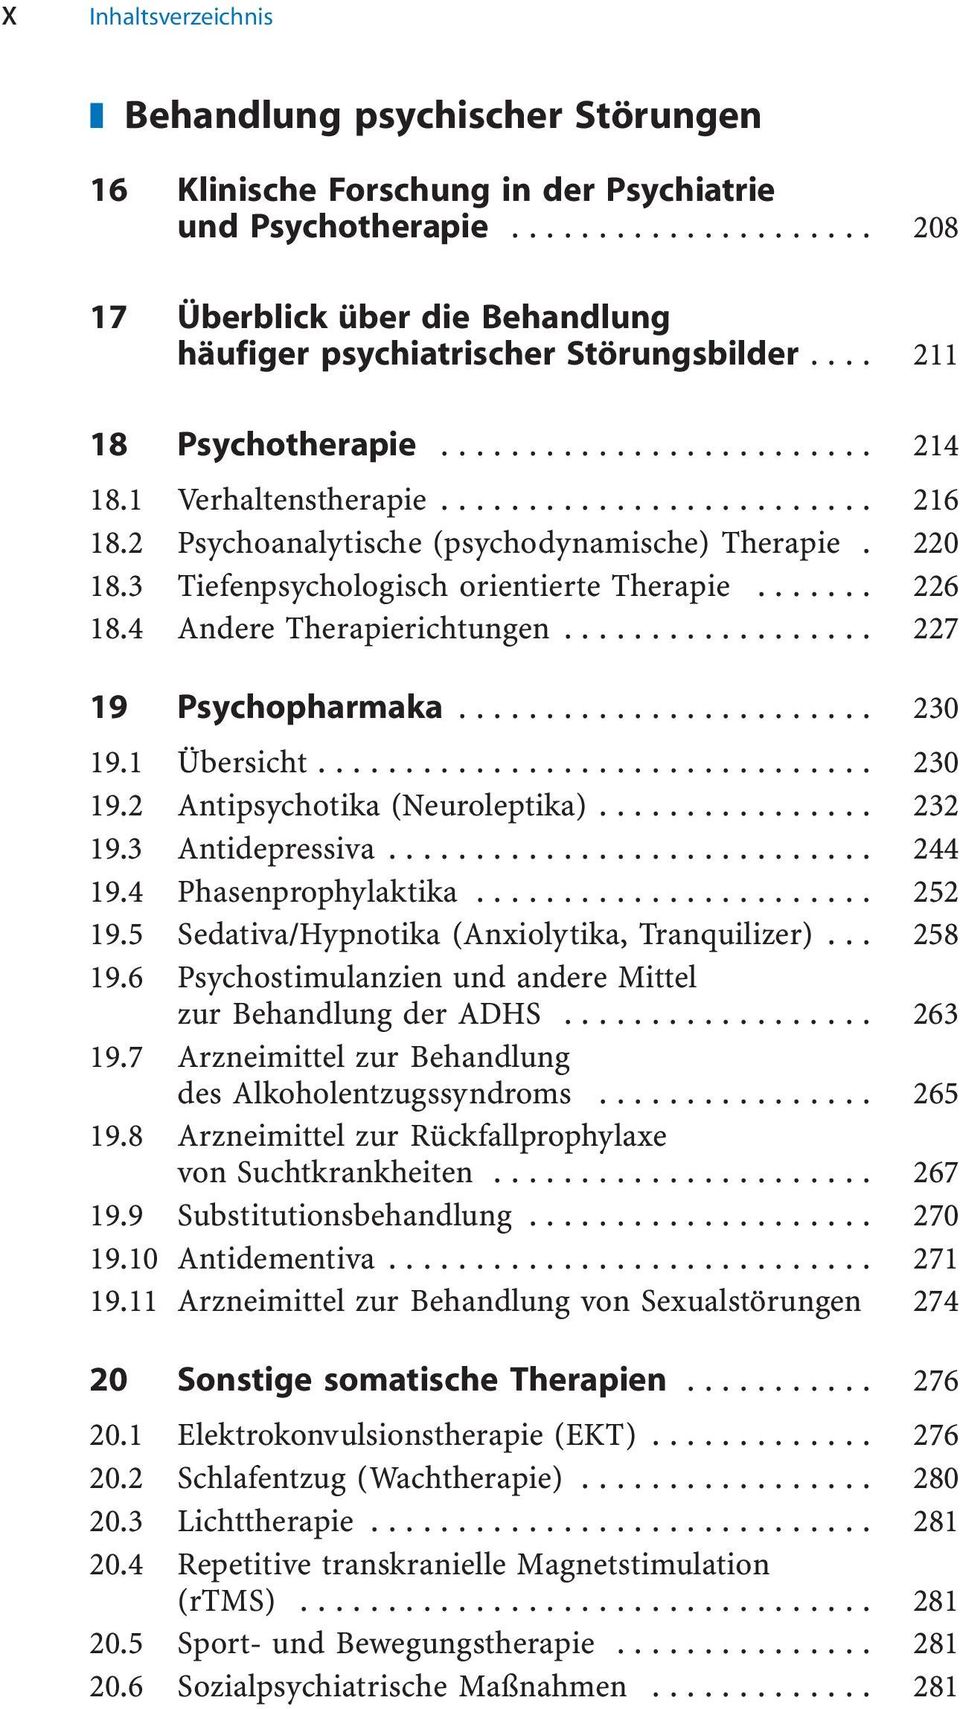 4 Andere Therapierichtungen... 227 19 Psychopharmaka... 230 19.1 Übersicht... 230 19.2 Antipsychotika (Neuroleptika)... 232 19.3 Antidepressiva... 244 19.4 Phasenprophylaktika... 252 19.